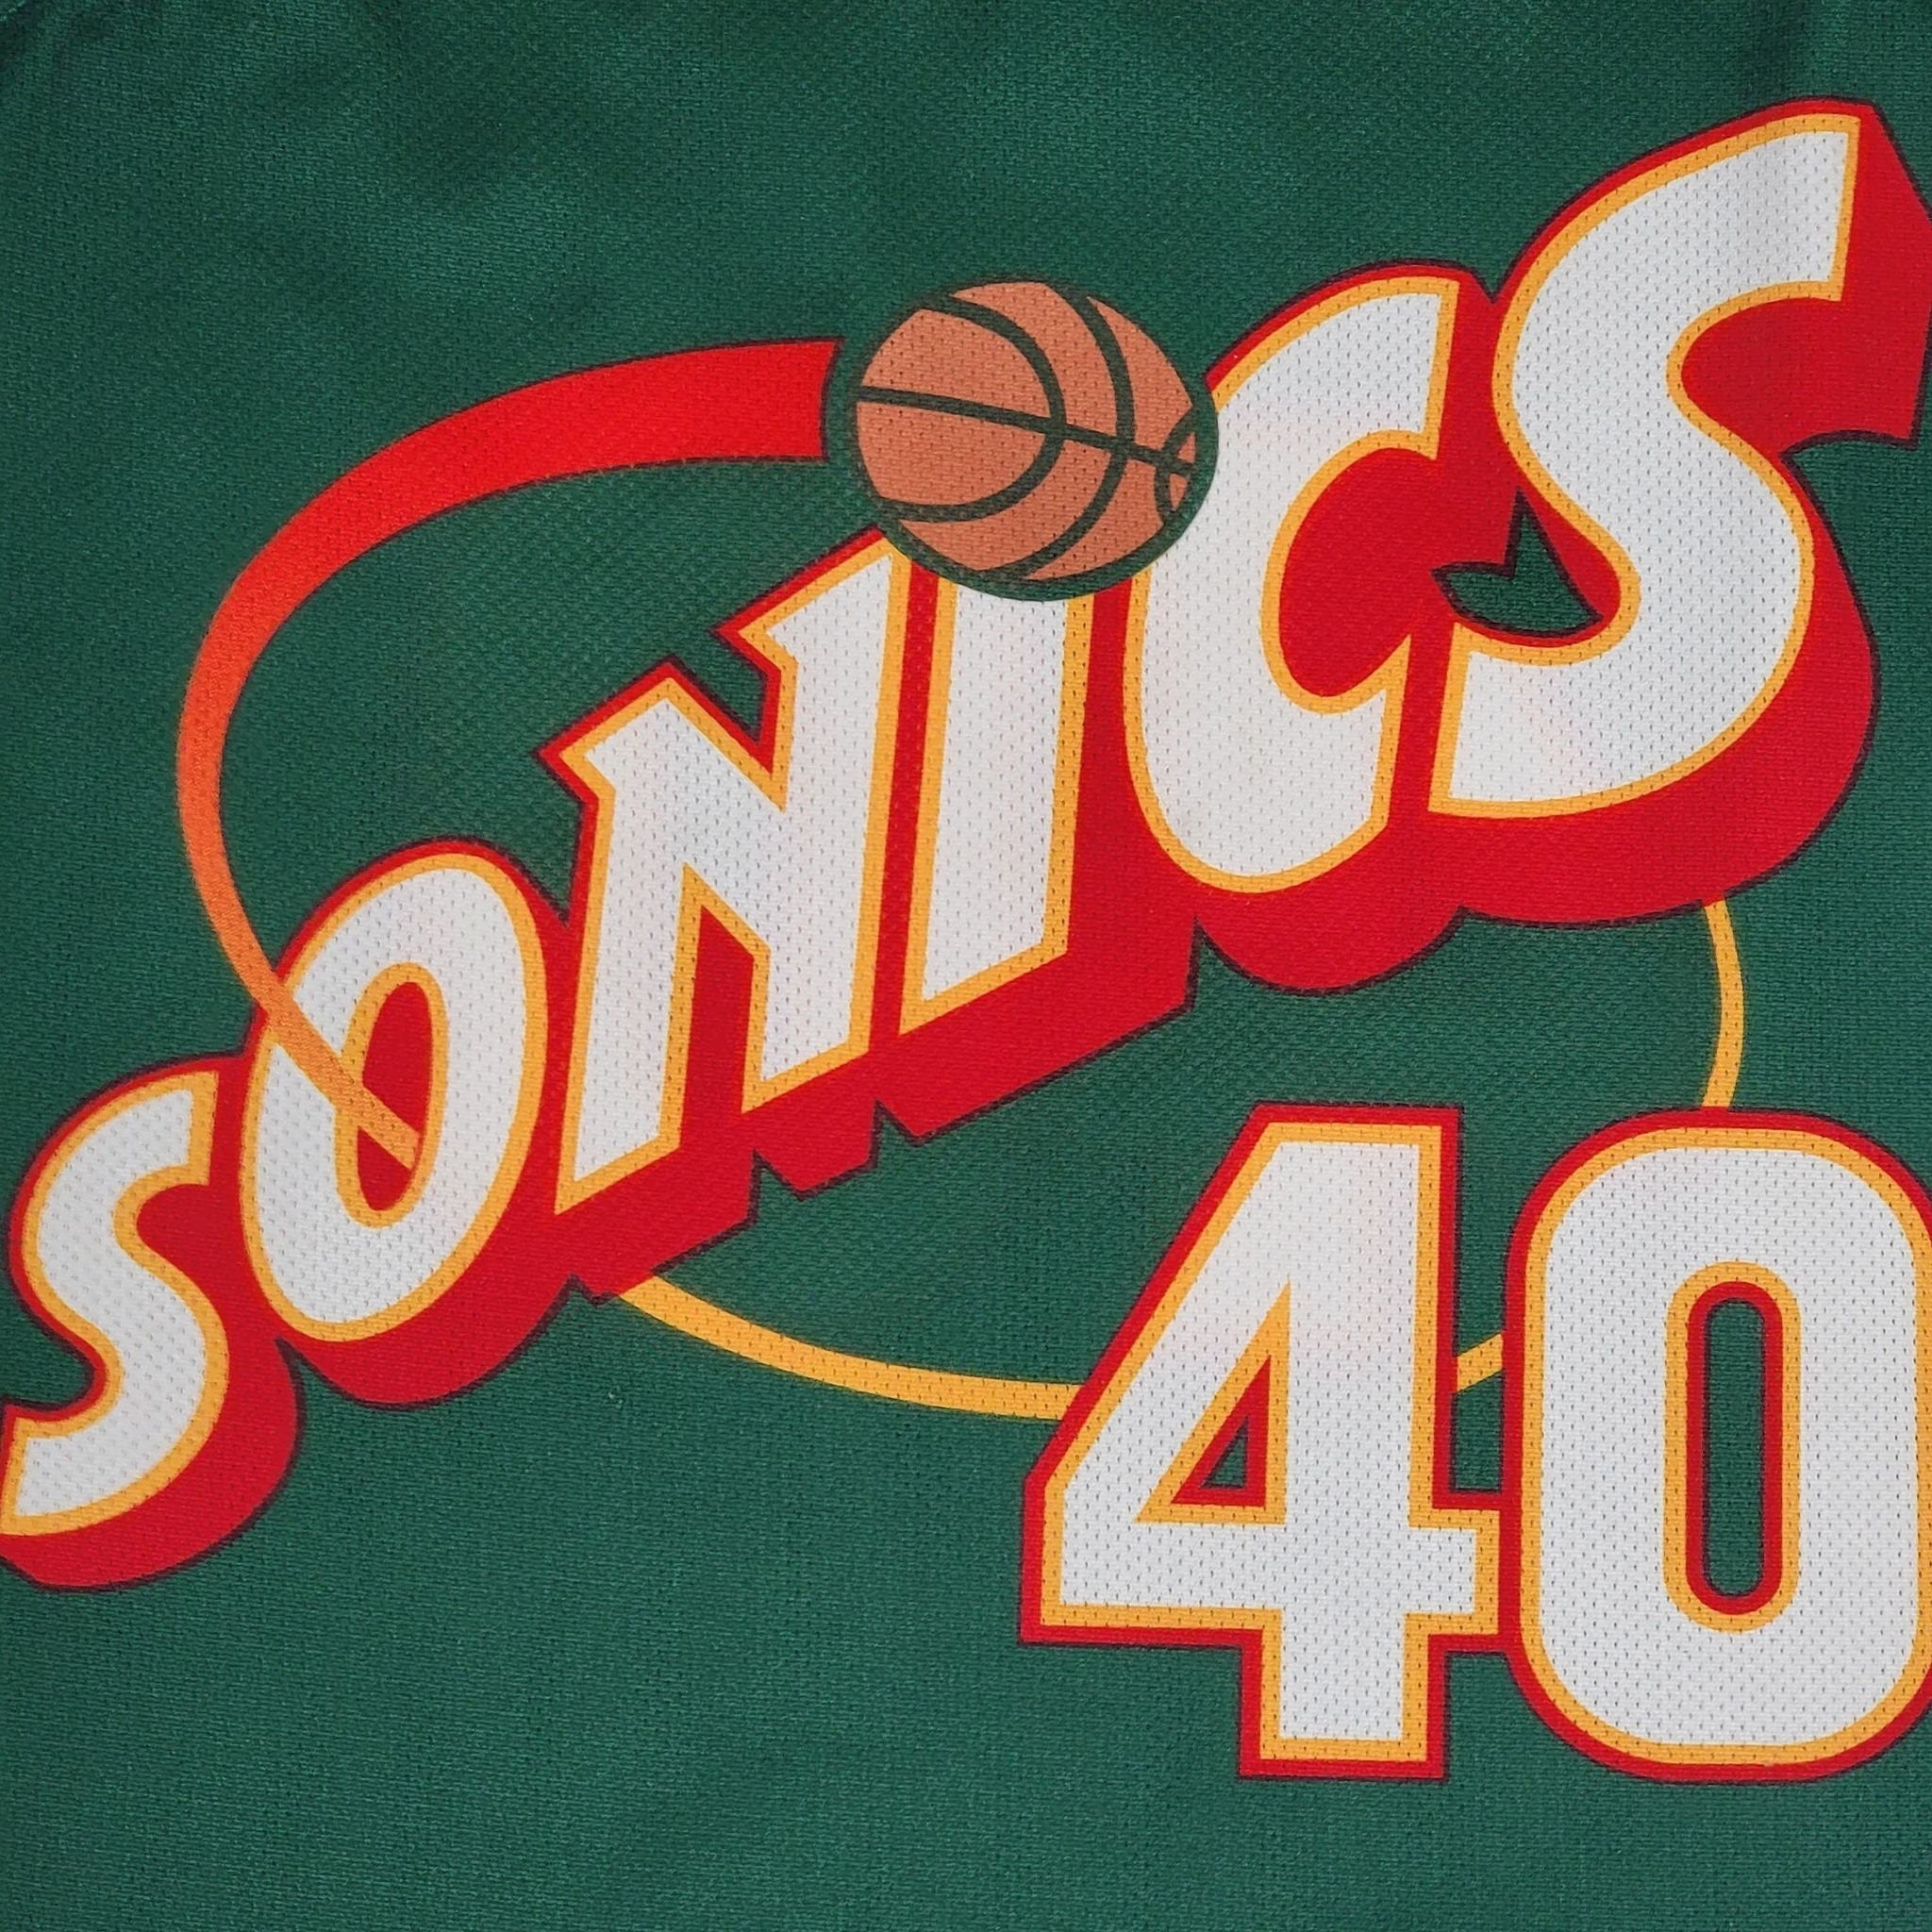 Seattle Super Sonics Vintage 90s Shawn Kemp Champion Basketball